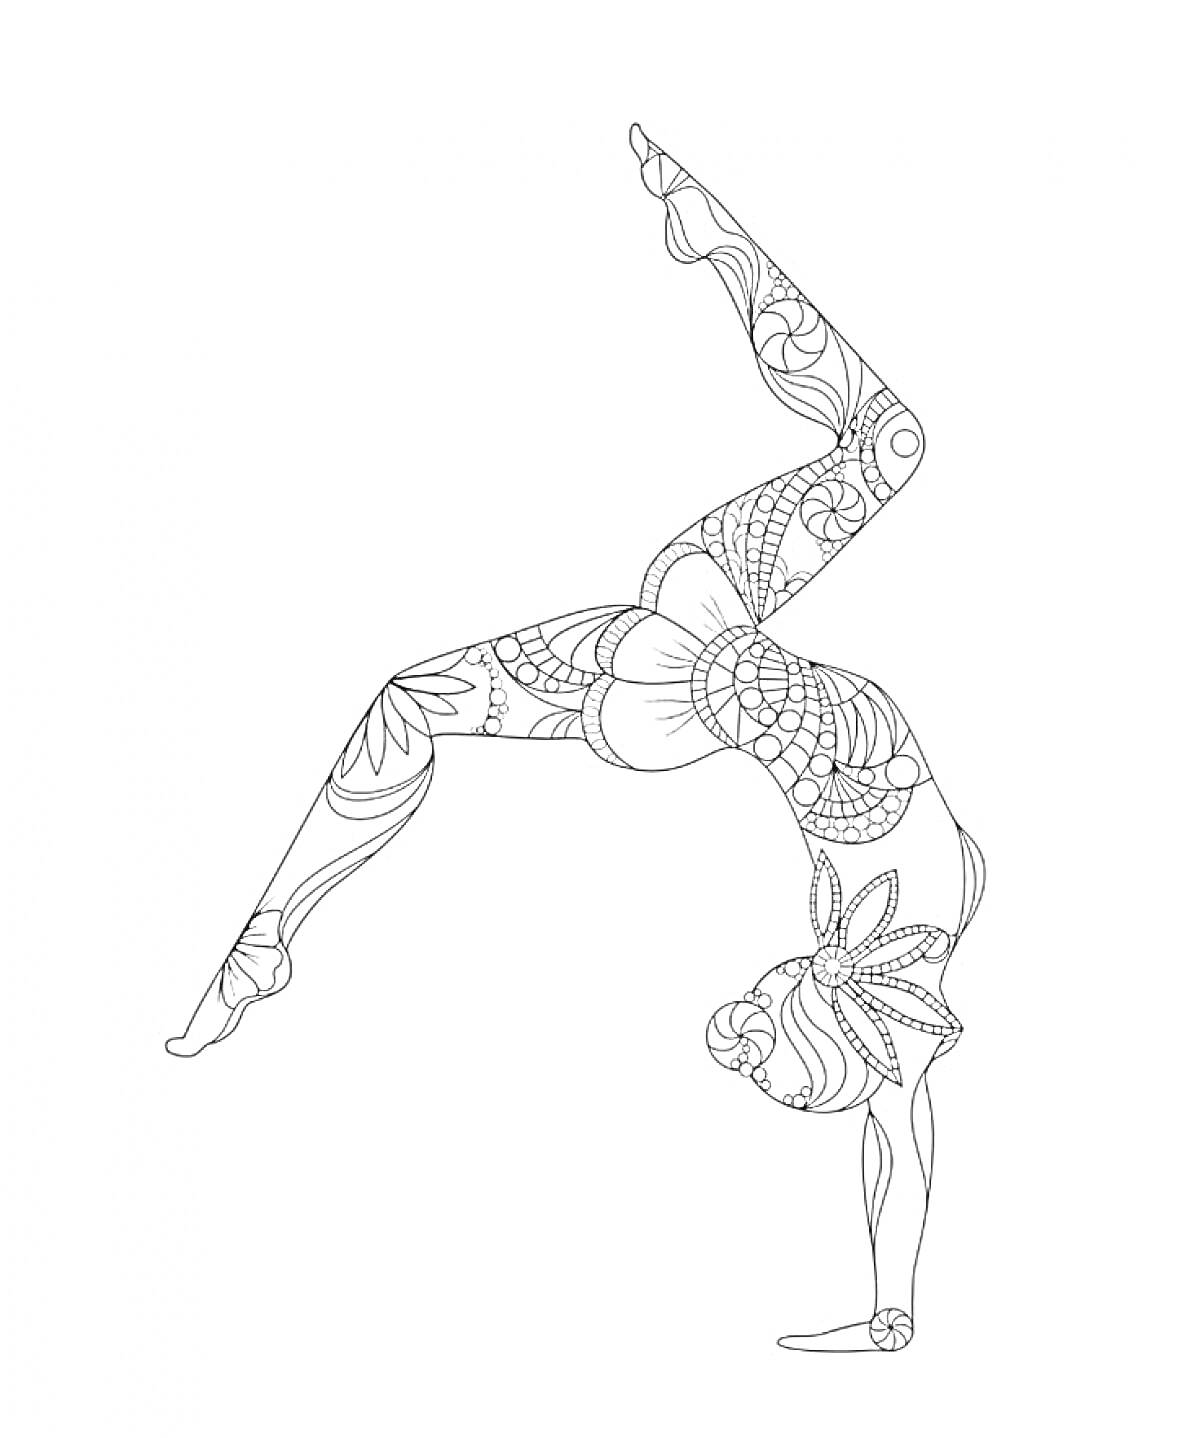 Гимнастка в стойке на руках с декоративными узорами на теле